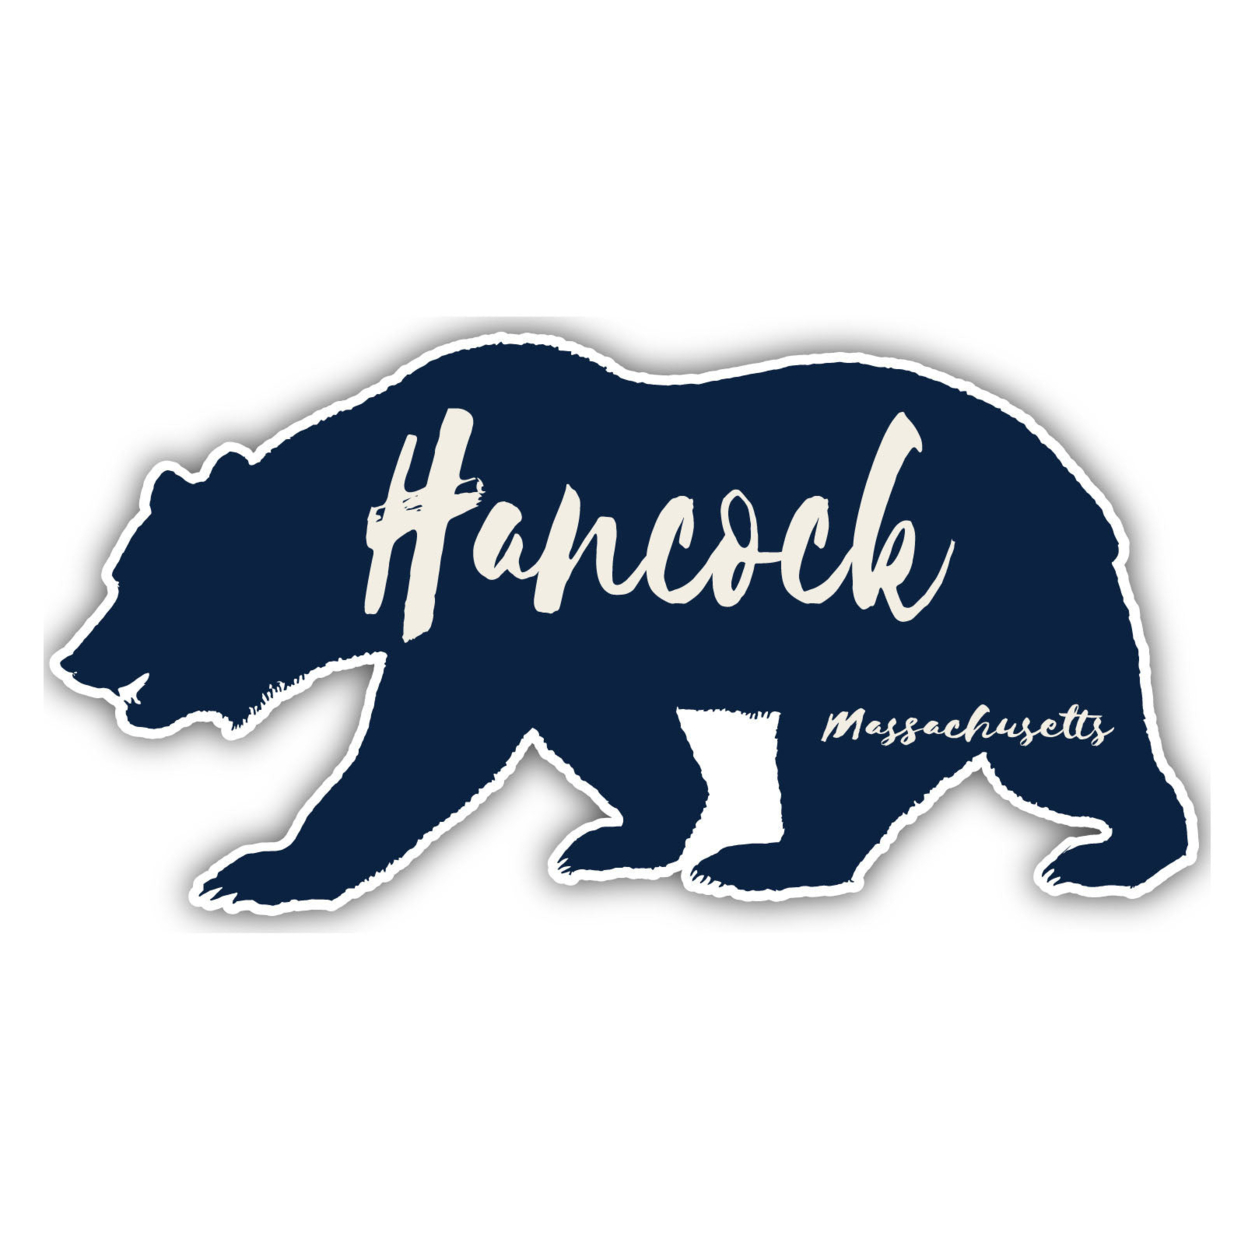 Hancock Massachusetts Souvenir Decorative Stickers (Choose Theme And Size) - 4-Pack, 6-Inch, Bear